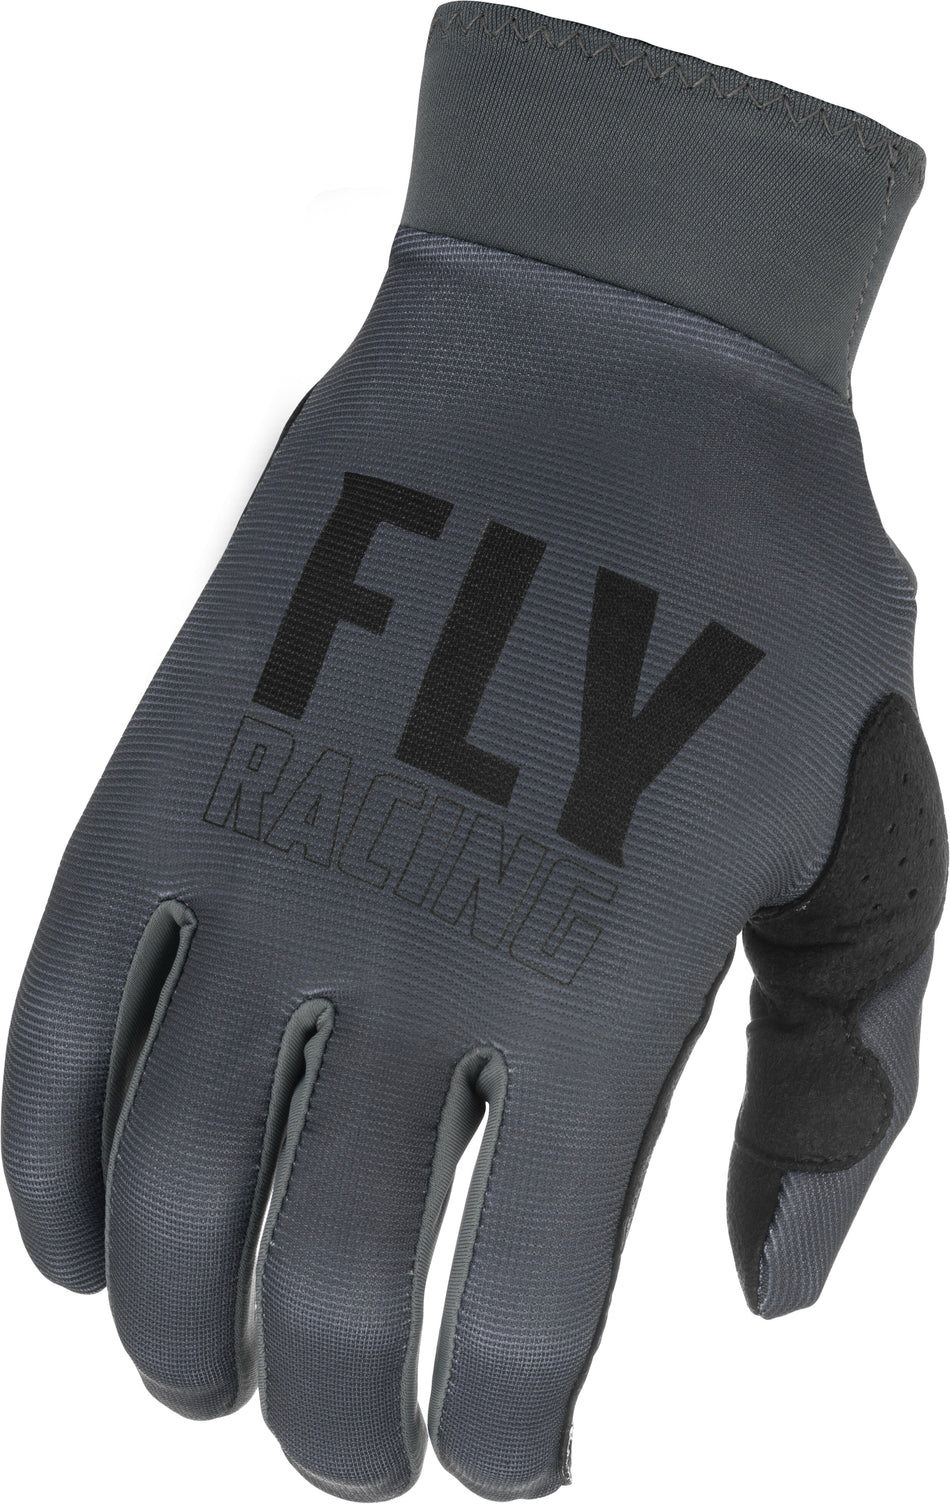 FLY RACING Pro Lite Gloves Grey/Black Sz 11 374-85611